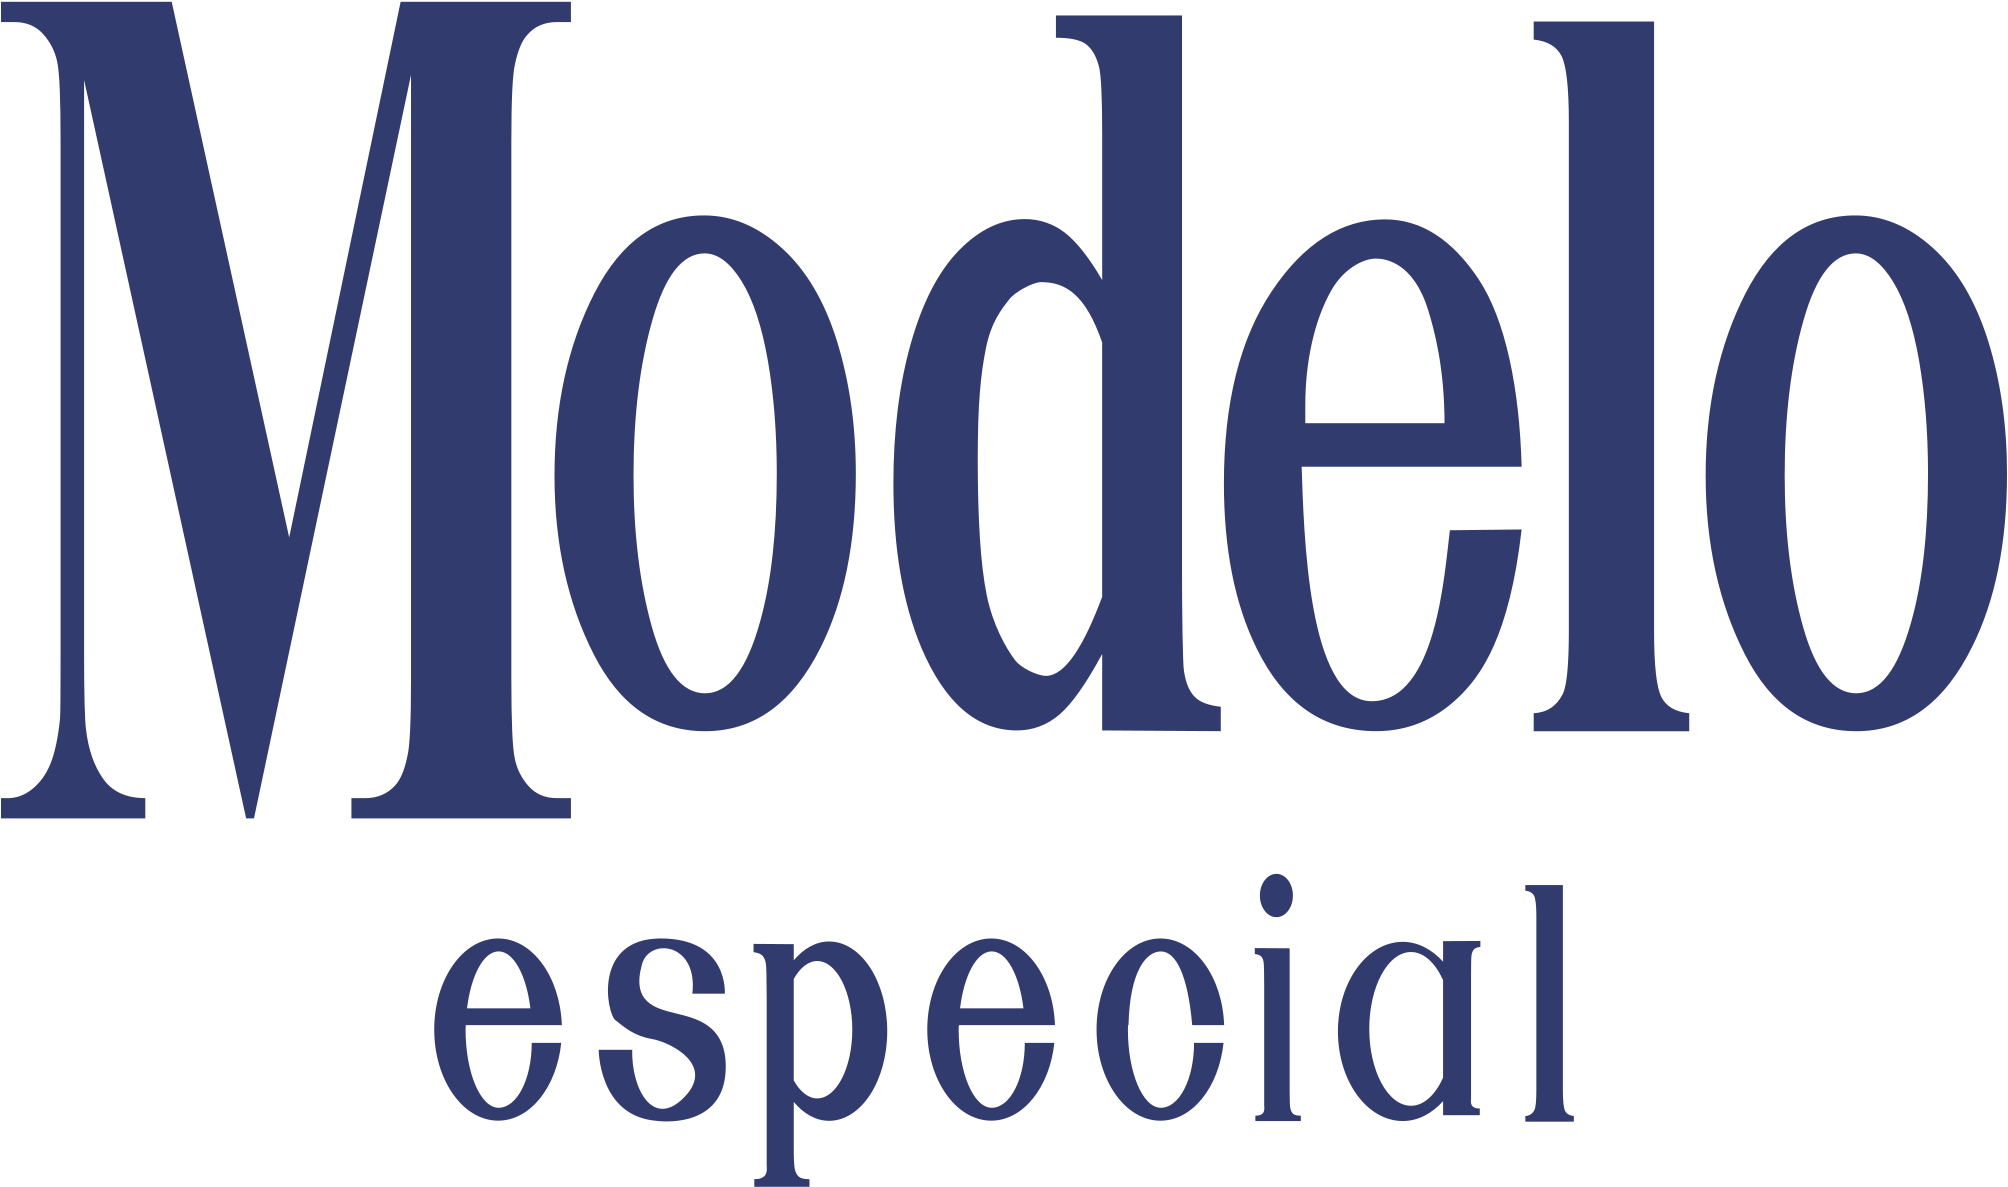 Download Modelo Especial Logo Png Transparent Modelo Especial Png Image With No Background Pngkey Com